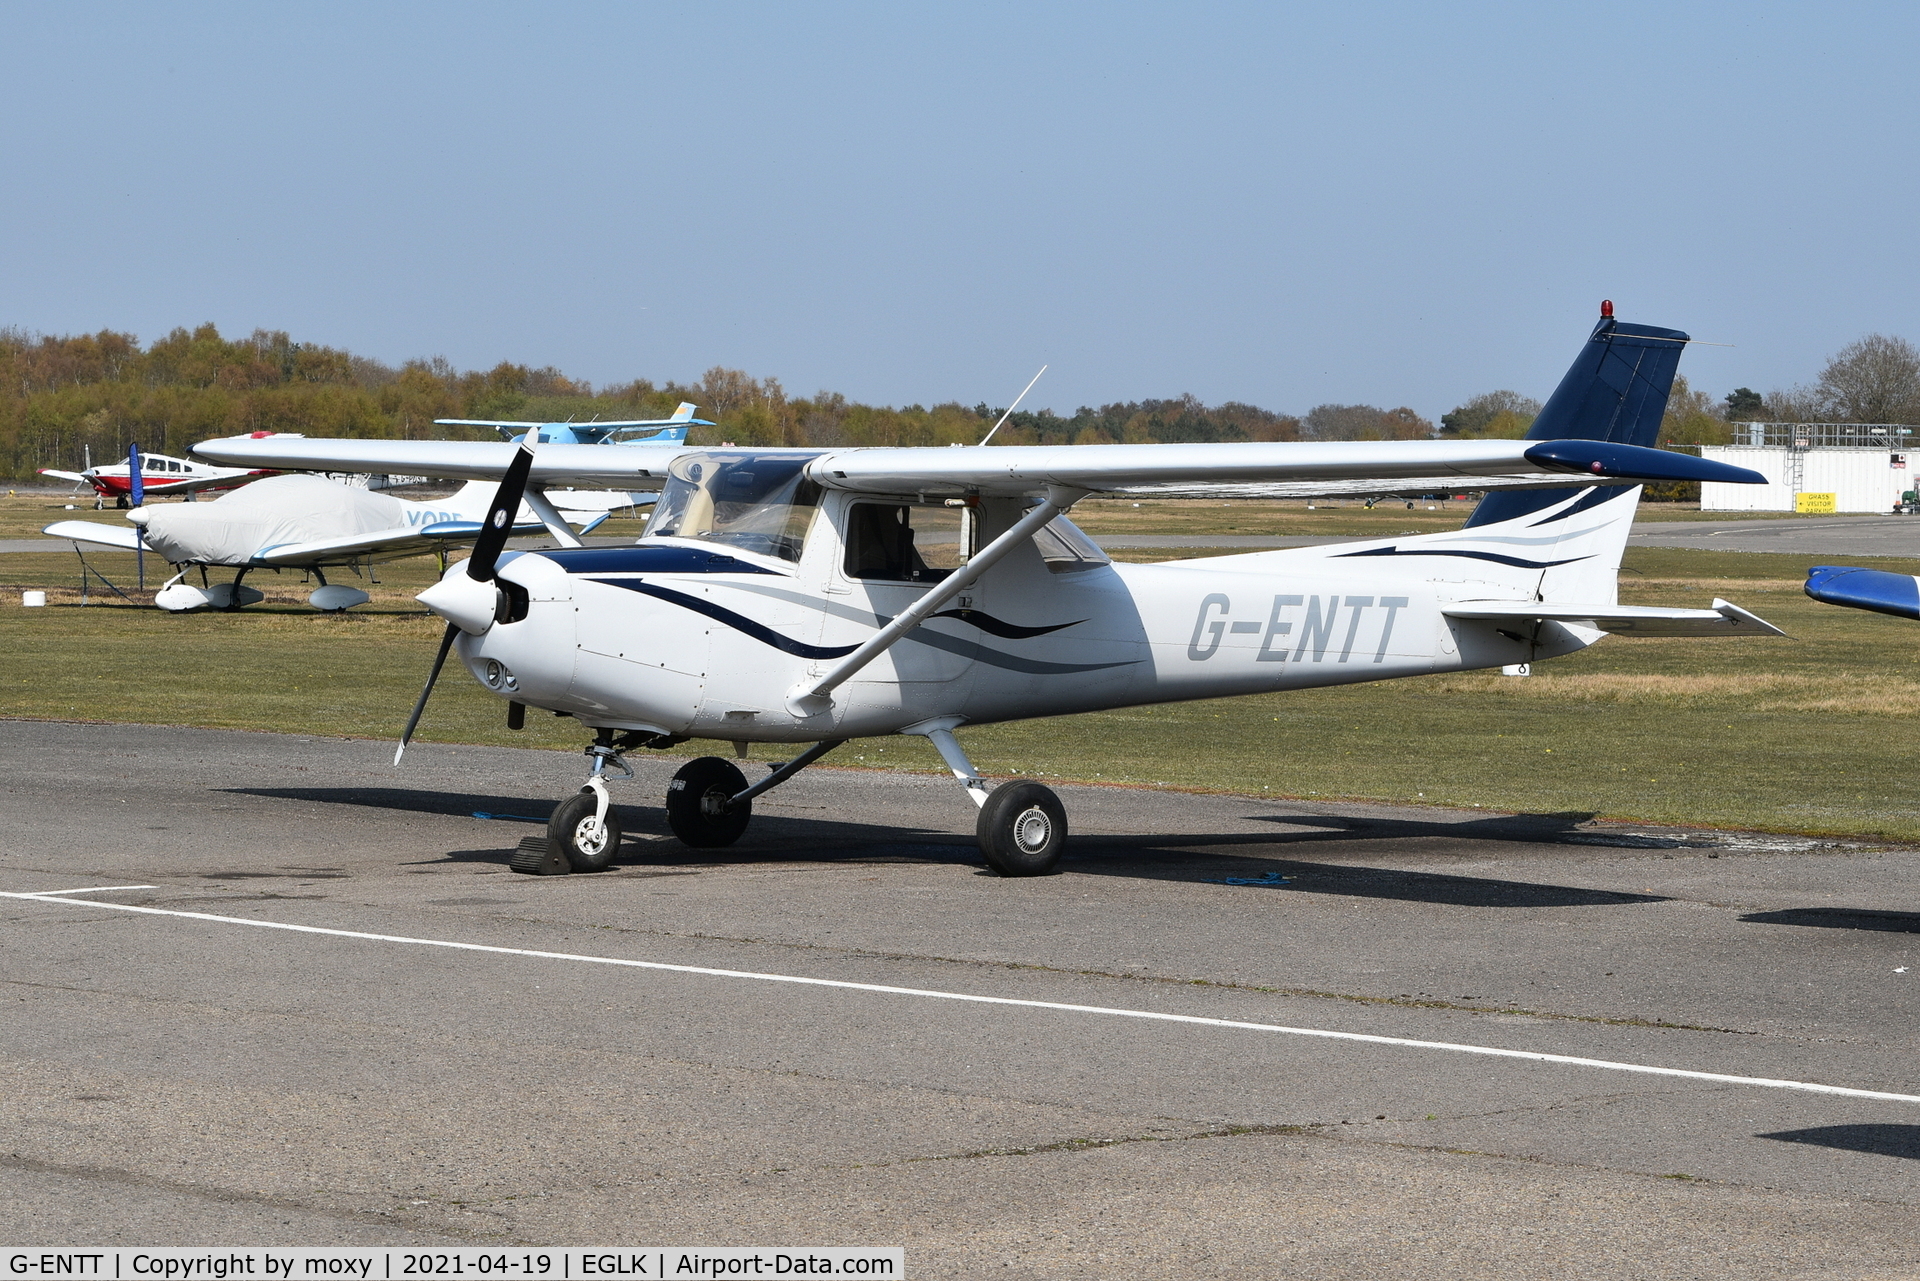 G-ENTT, 1980 Reims F152 C/N 1750, Reims Cessna F152 at Blackbushe.